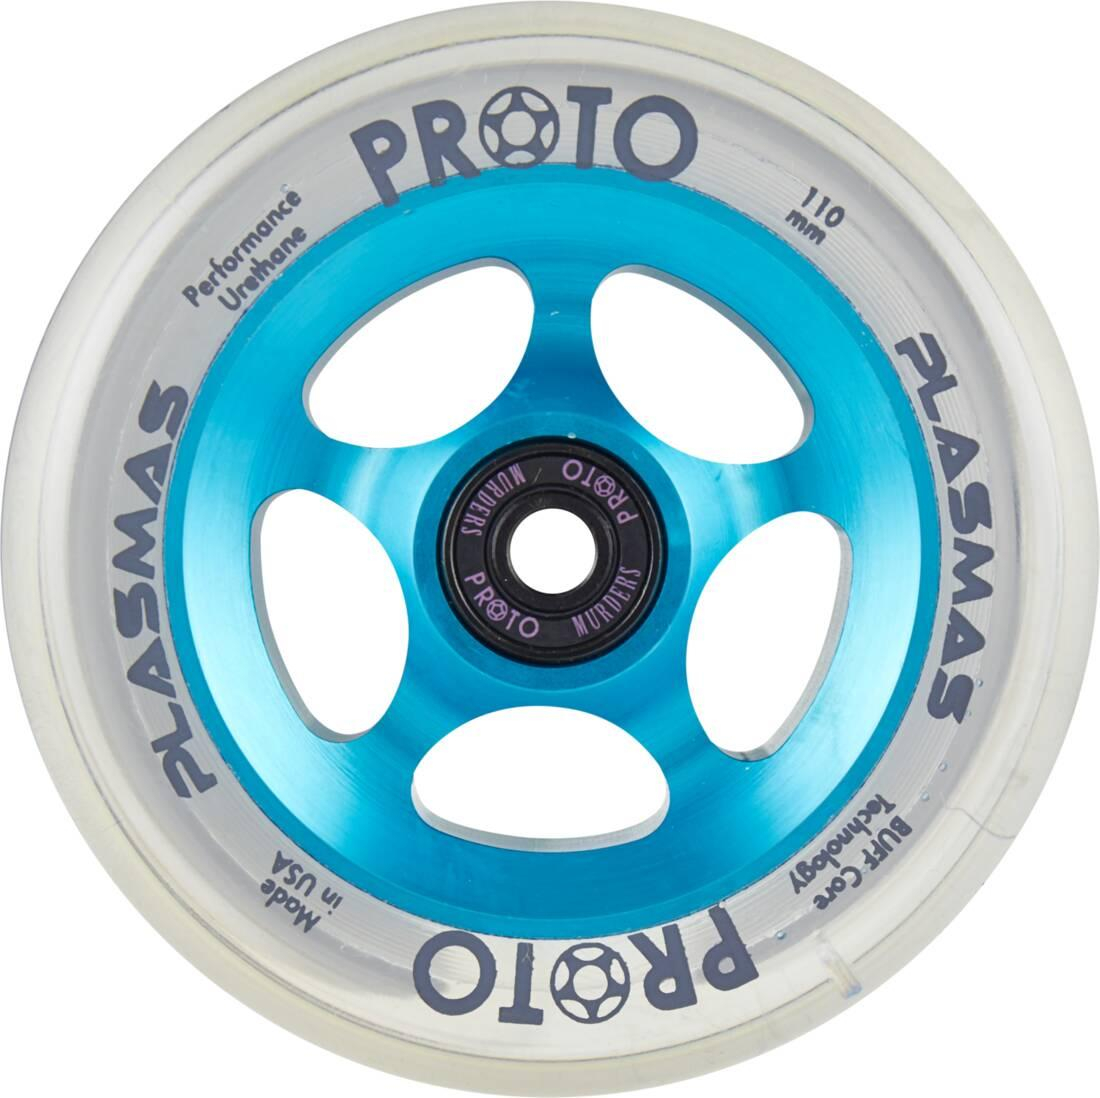 Proto Plasma Pro Scooter Wheels 2-Pack